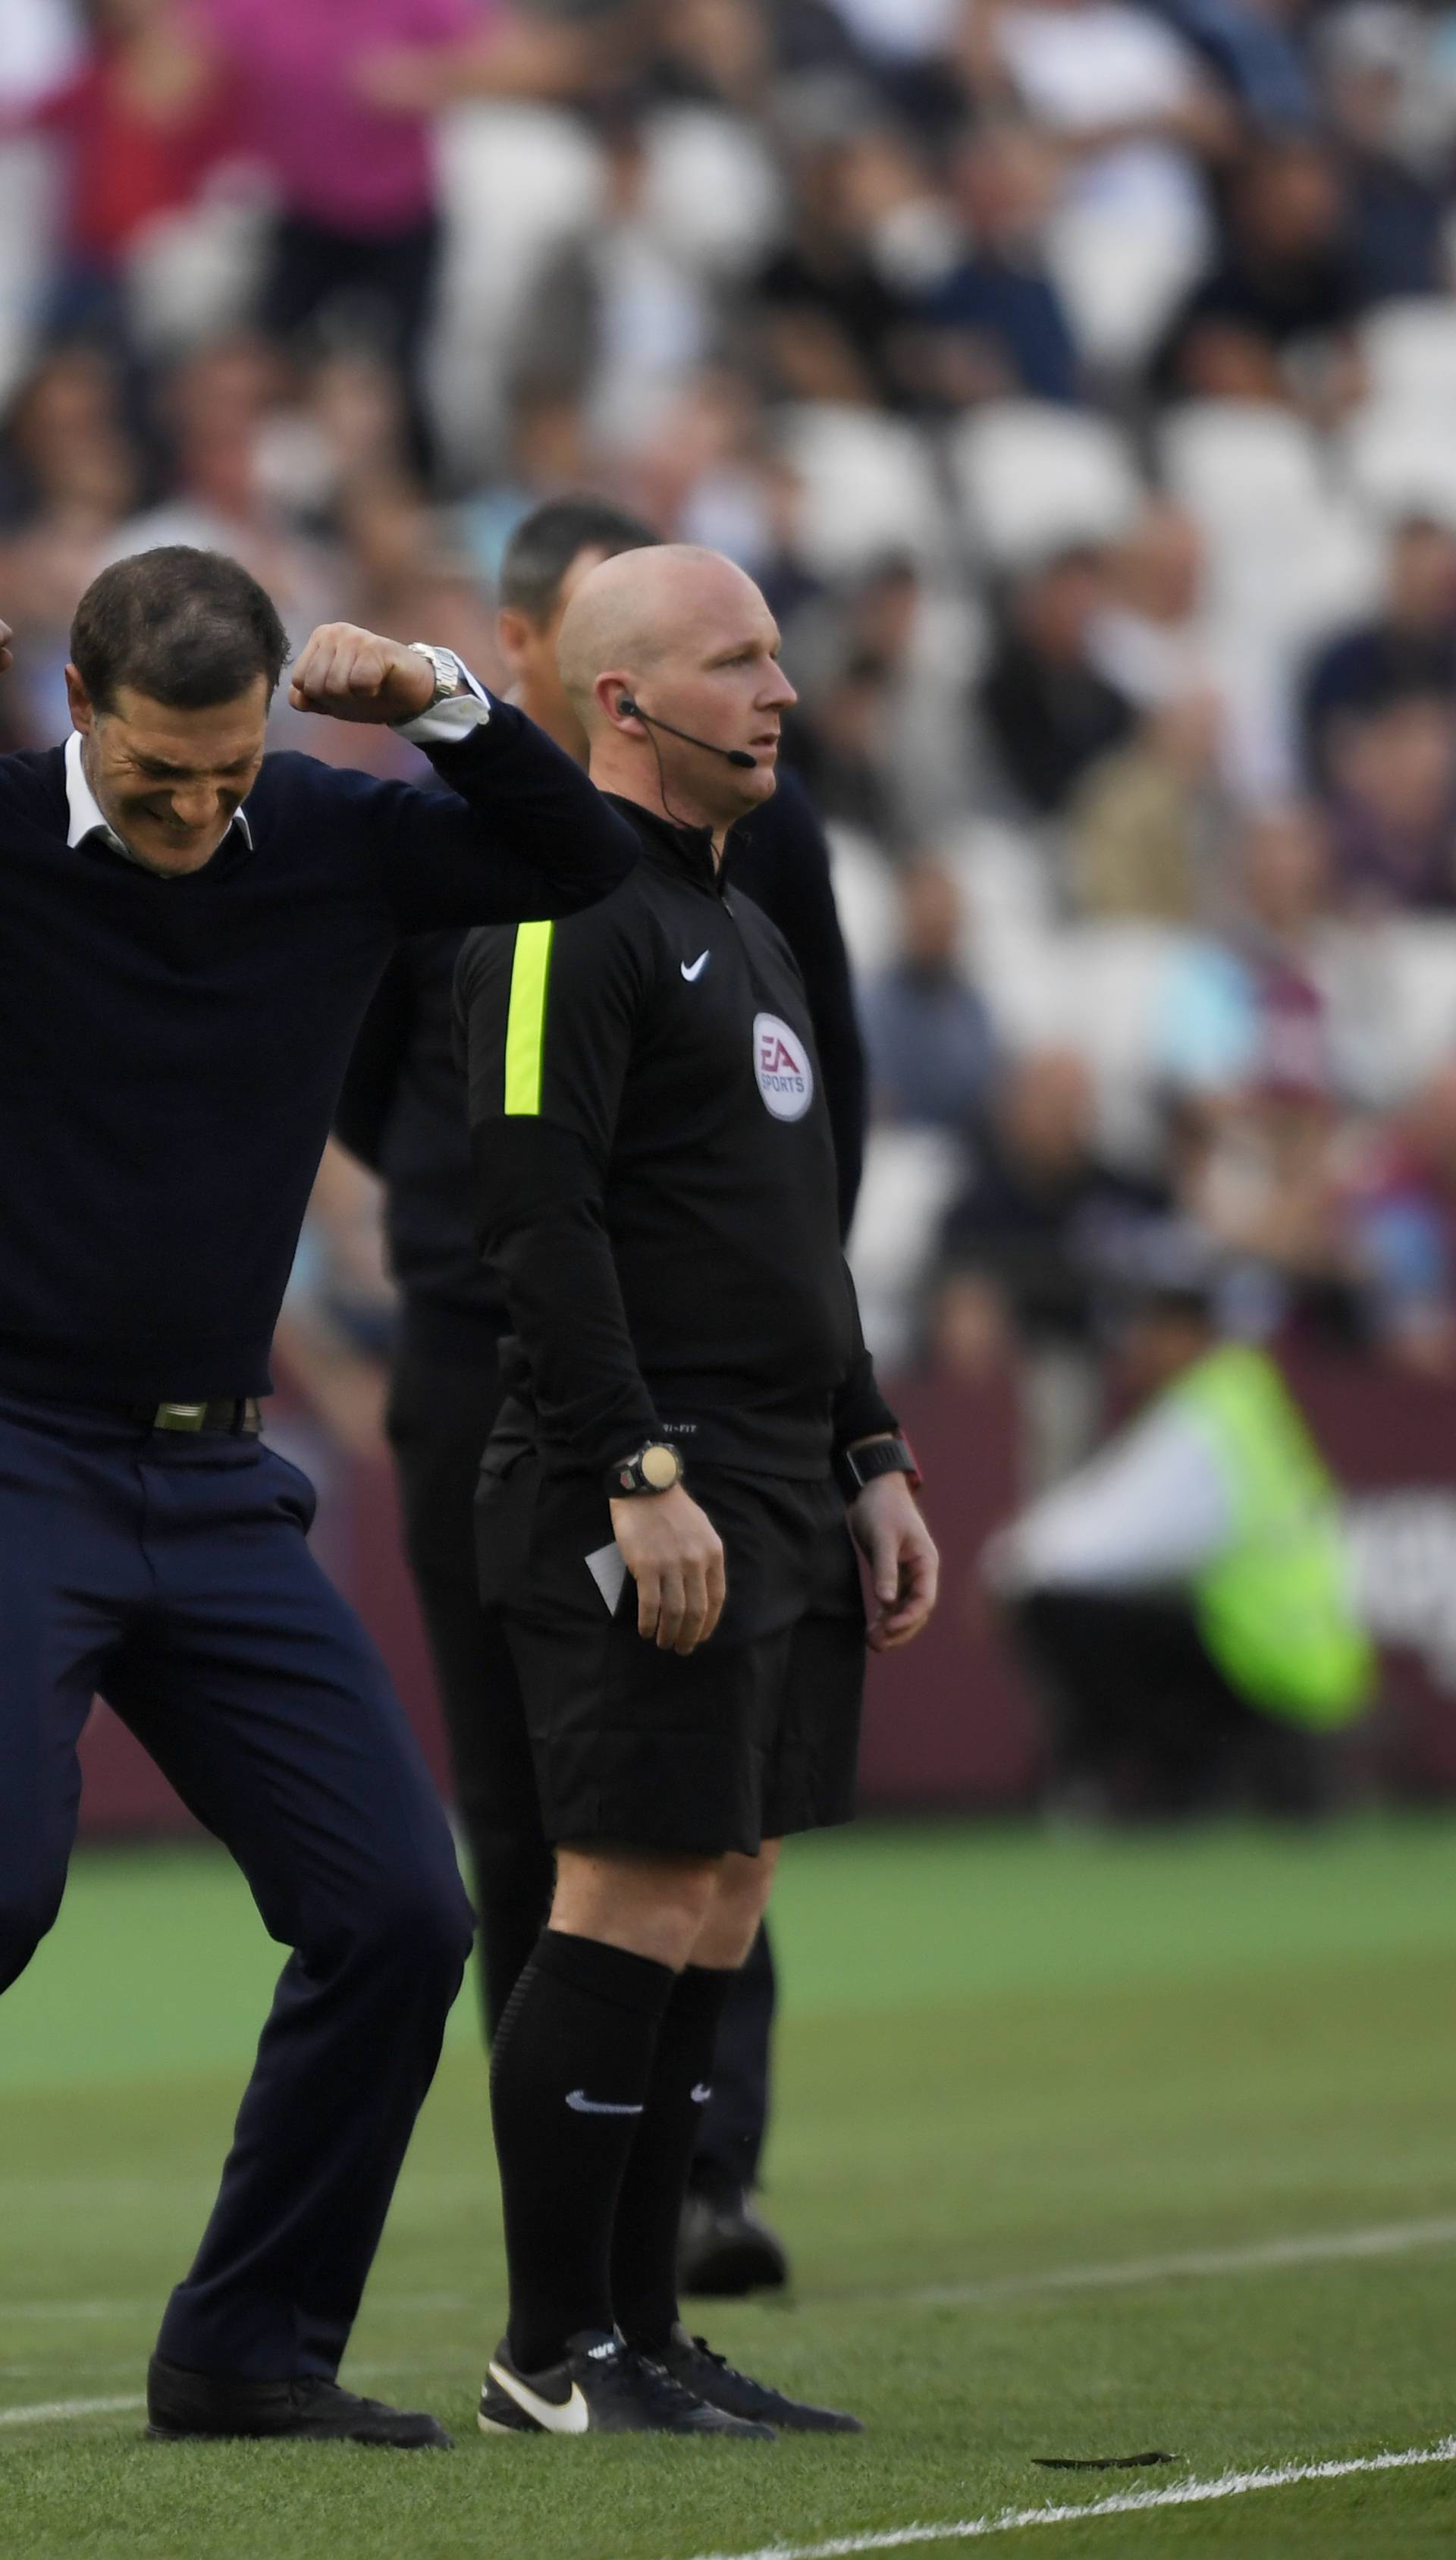 West Ham United manager Slaven Bilic celebrates after the match